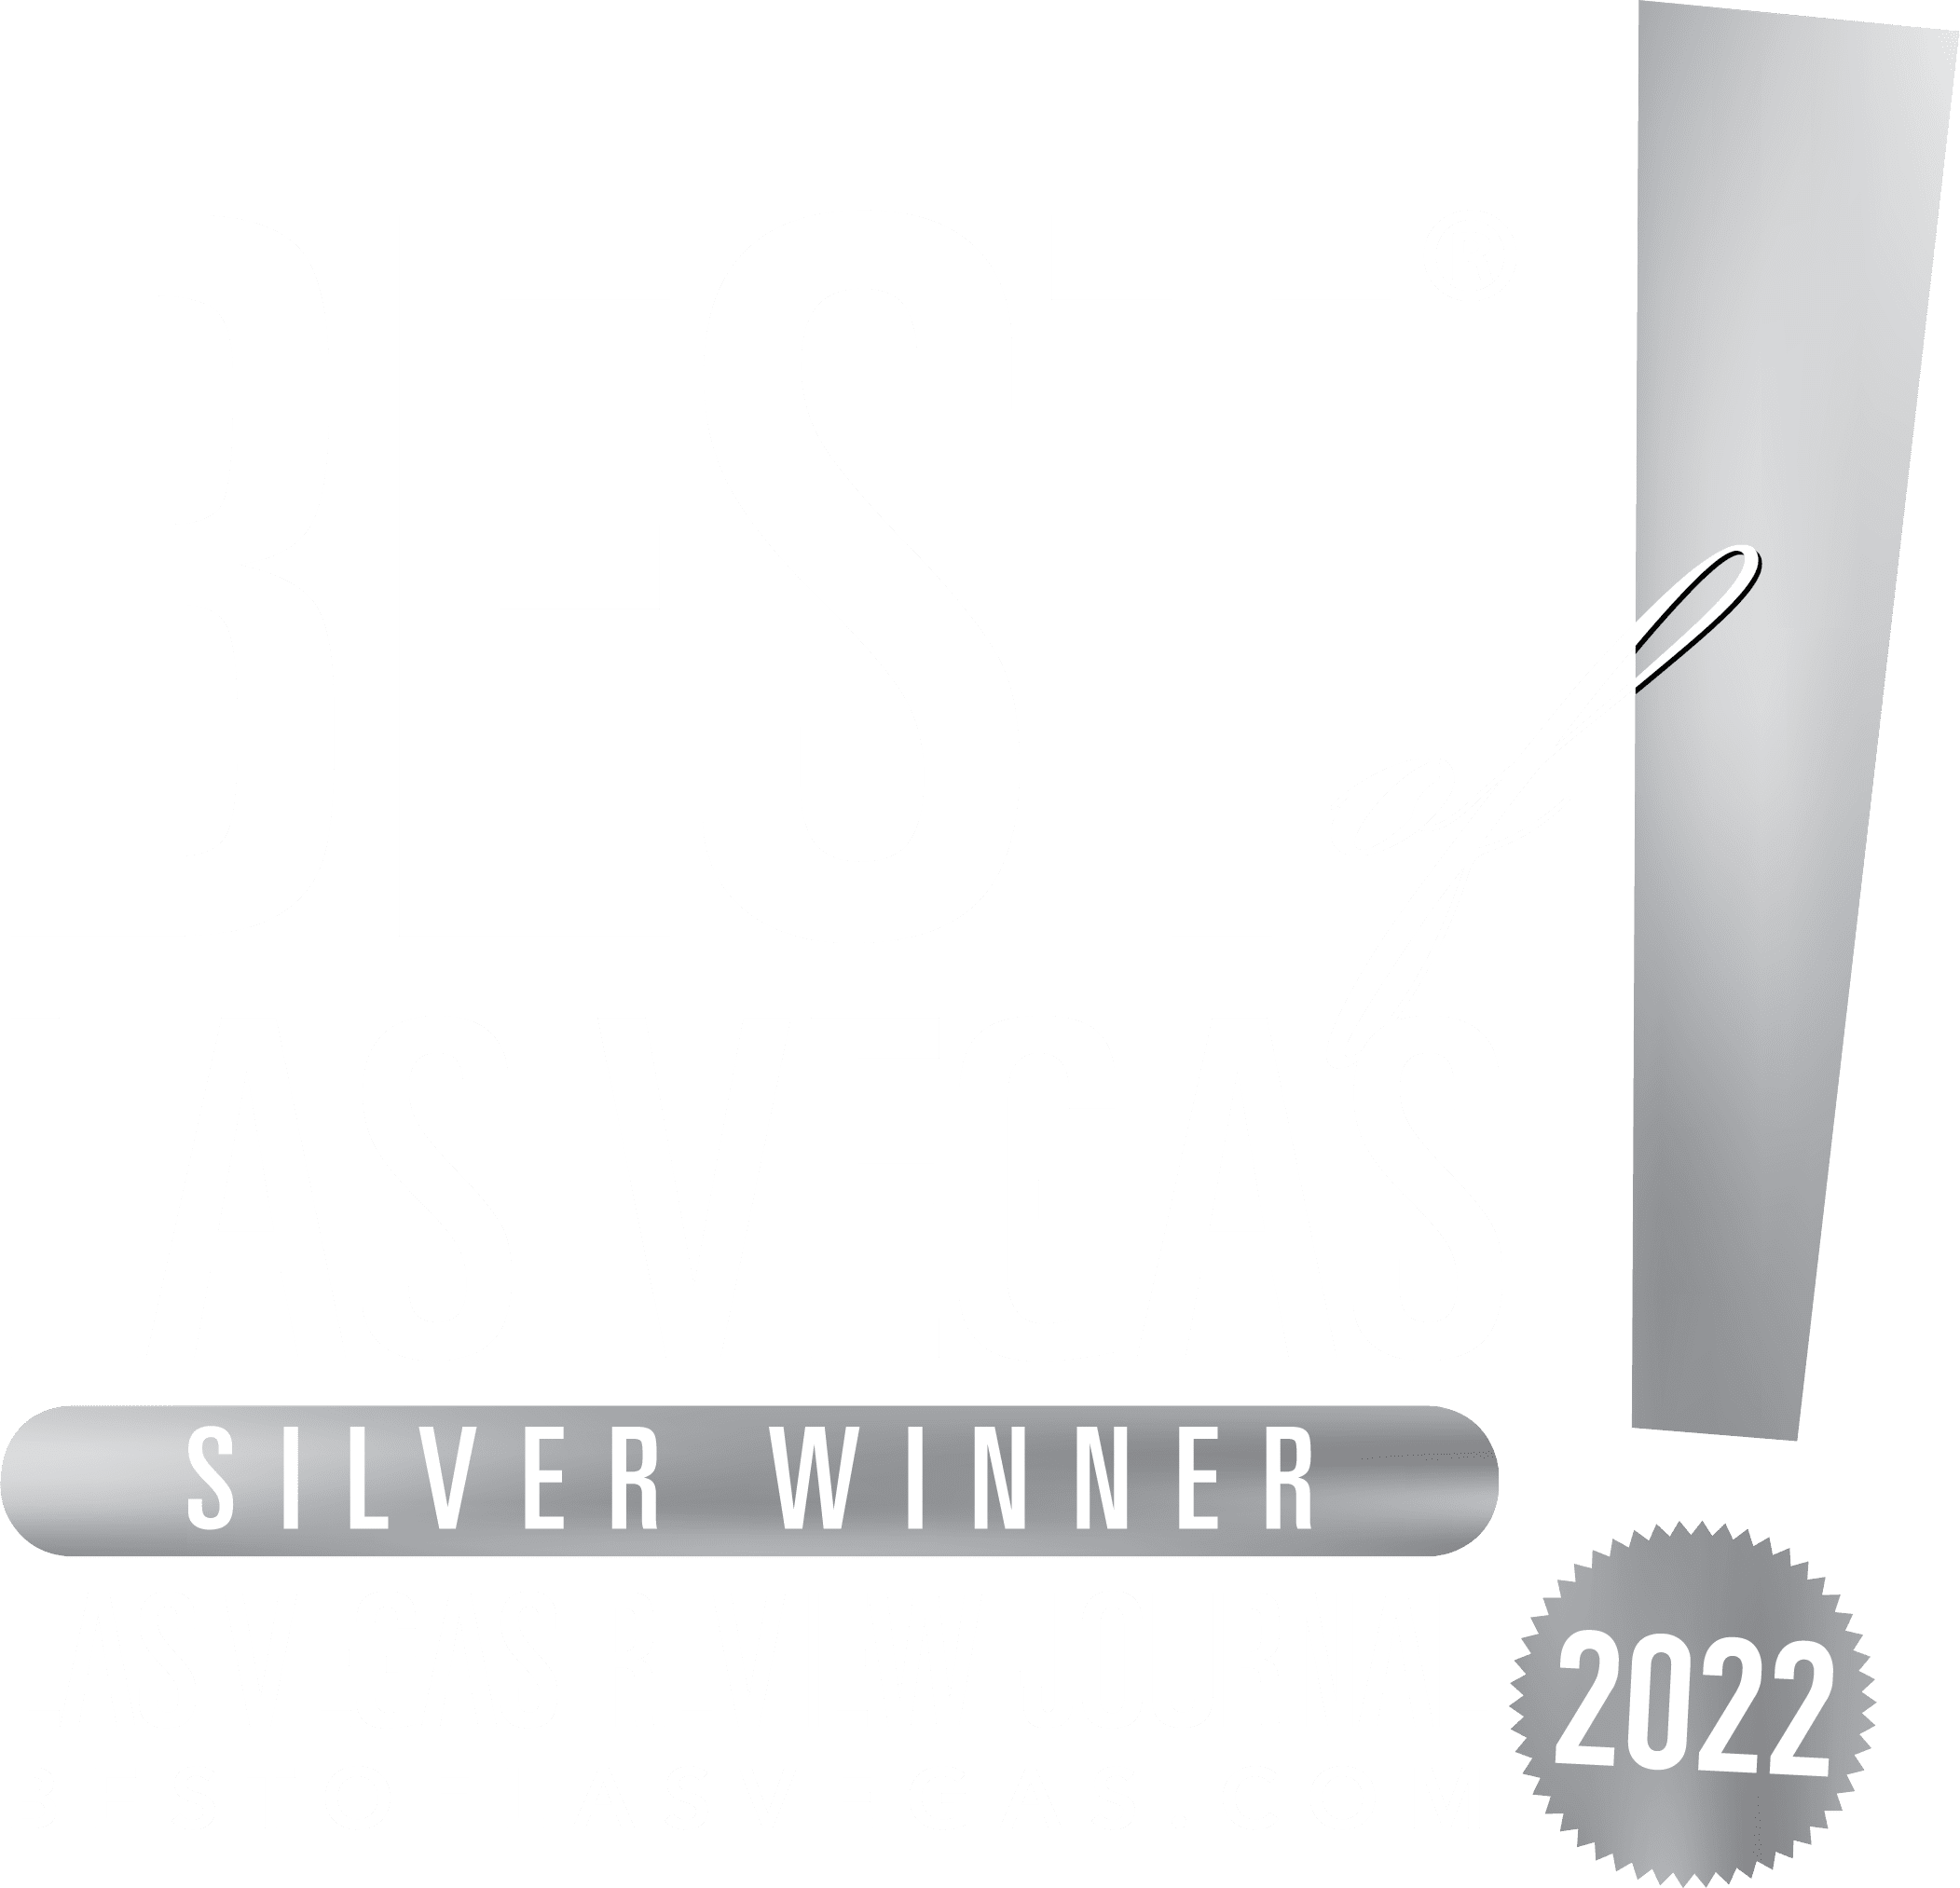 Voted Best Escape Room - Best of Las Vegas 2021